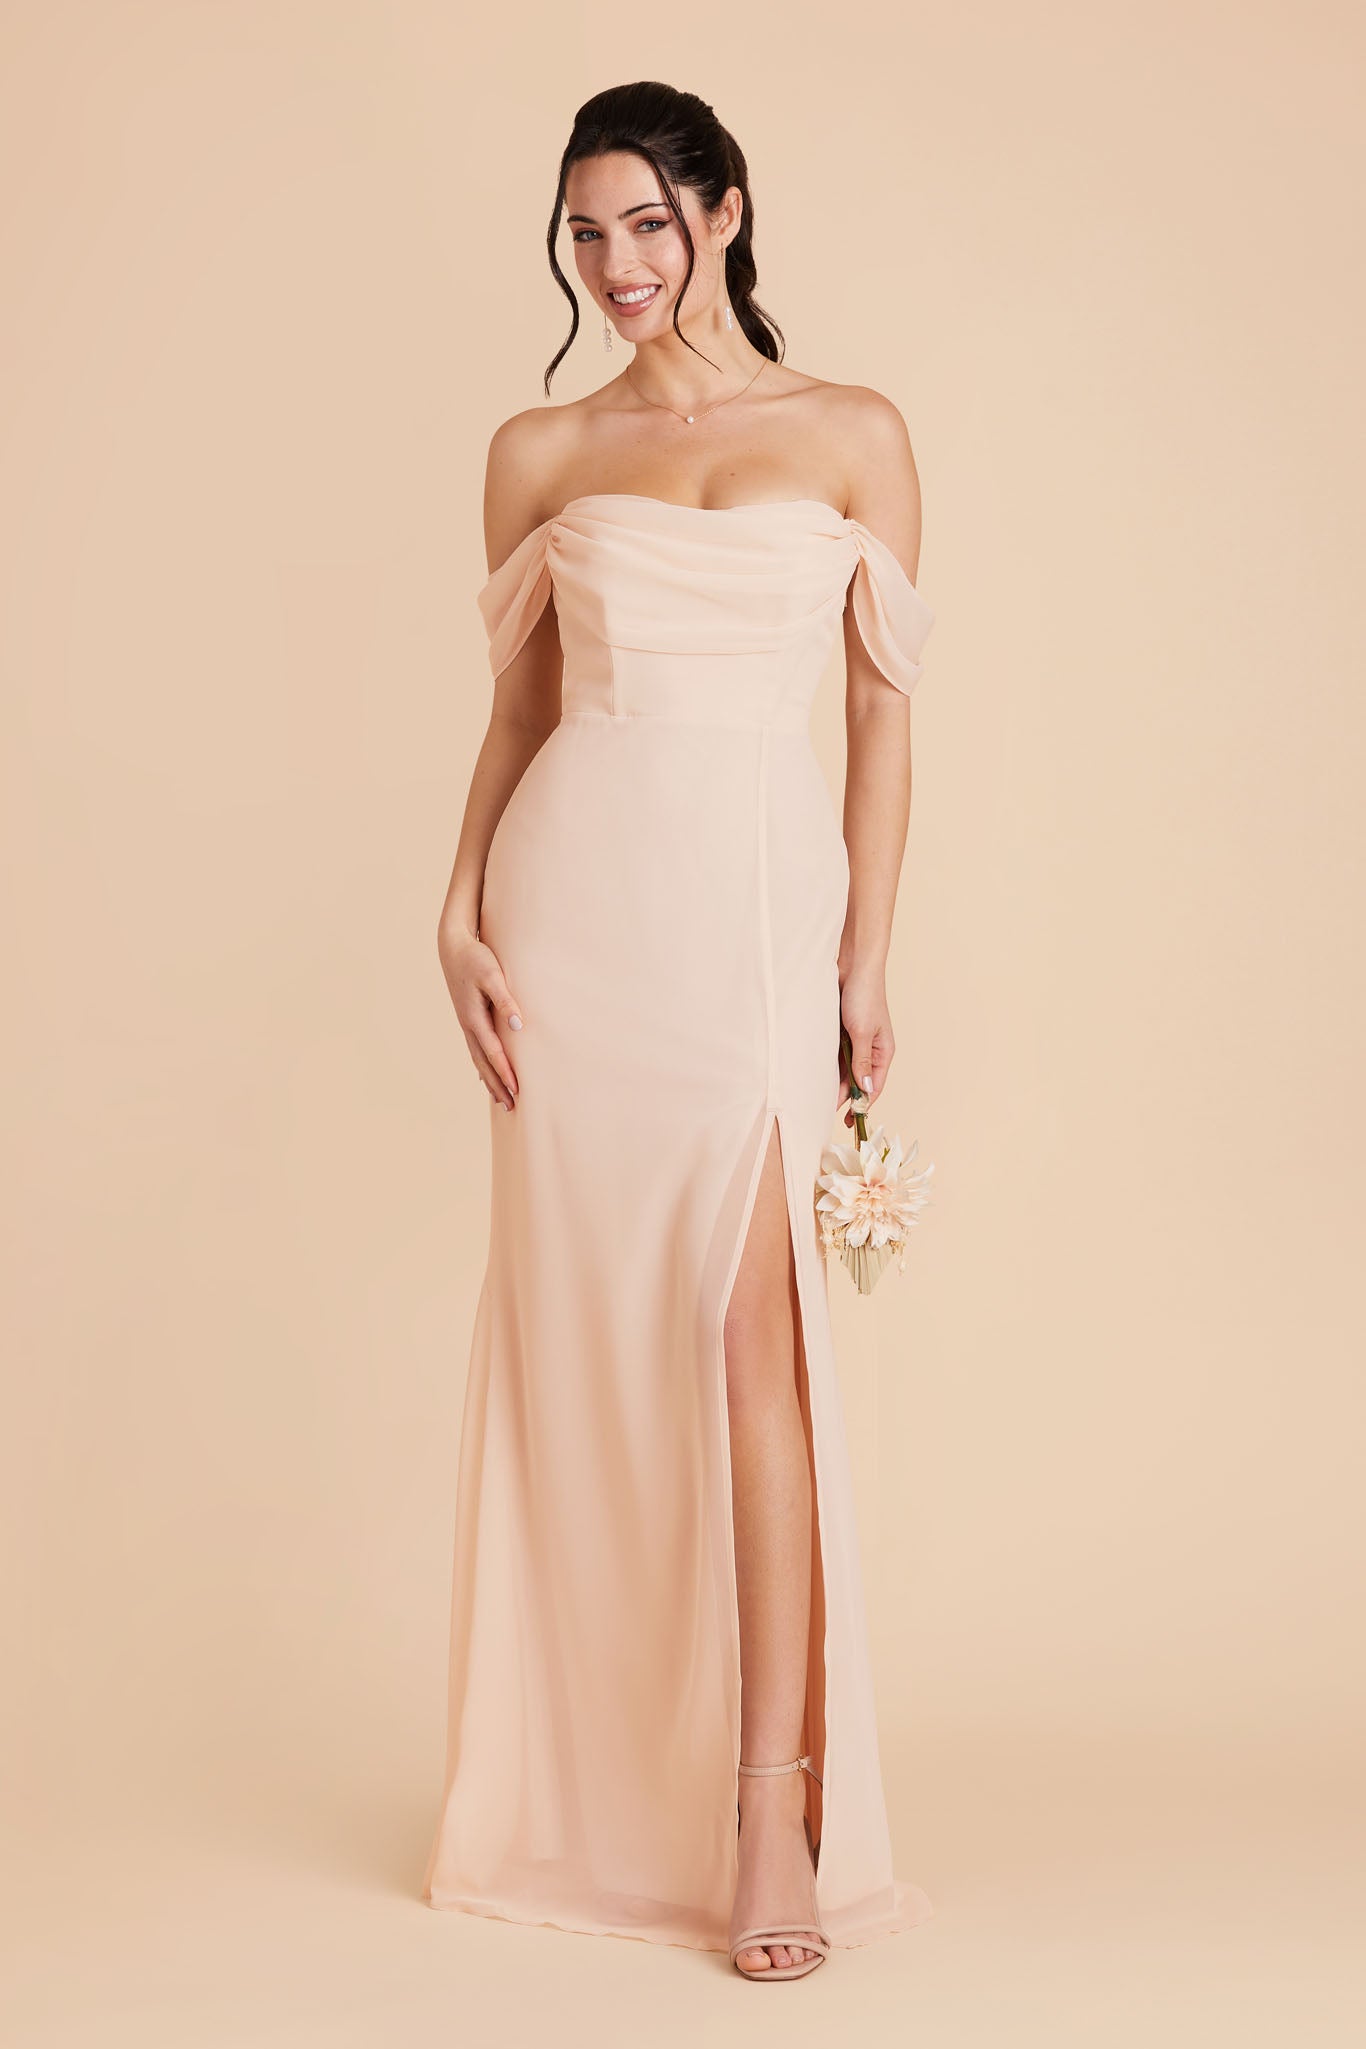 Pale Blush Mira Convertible Dress by Birdy Grey